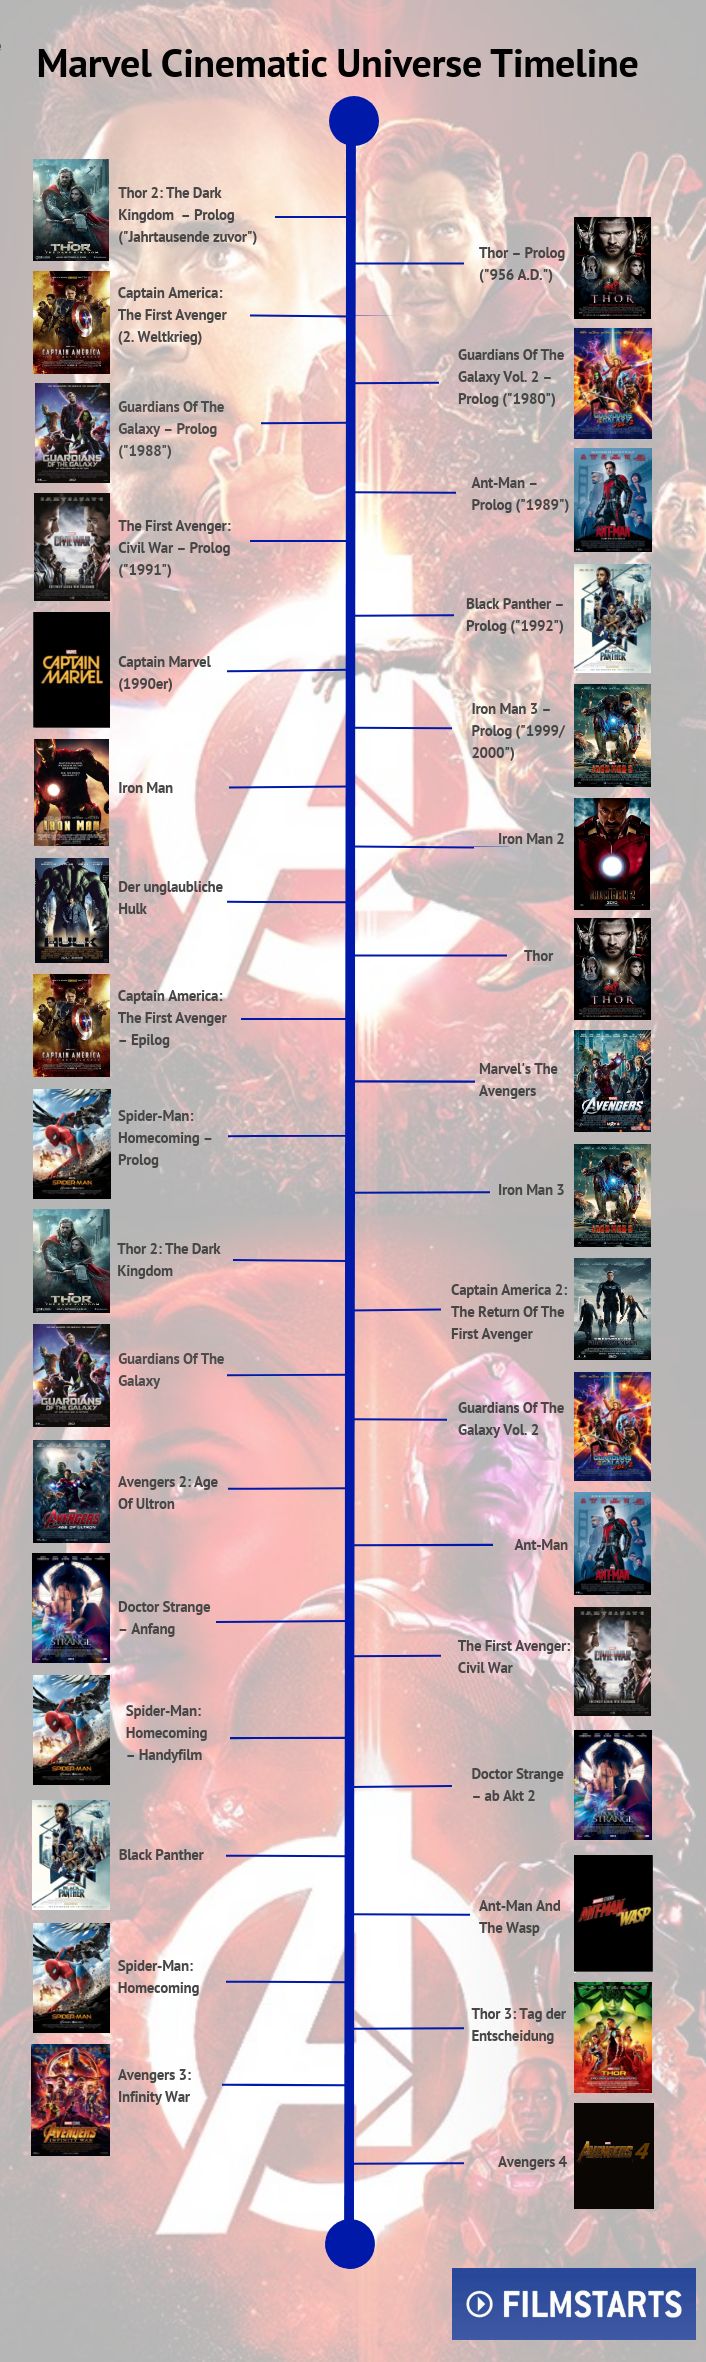 Die Timeline zu "Avengers Infinity War" Alle MarvelFilme in